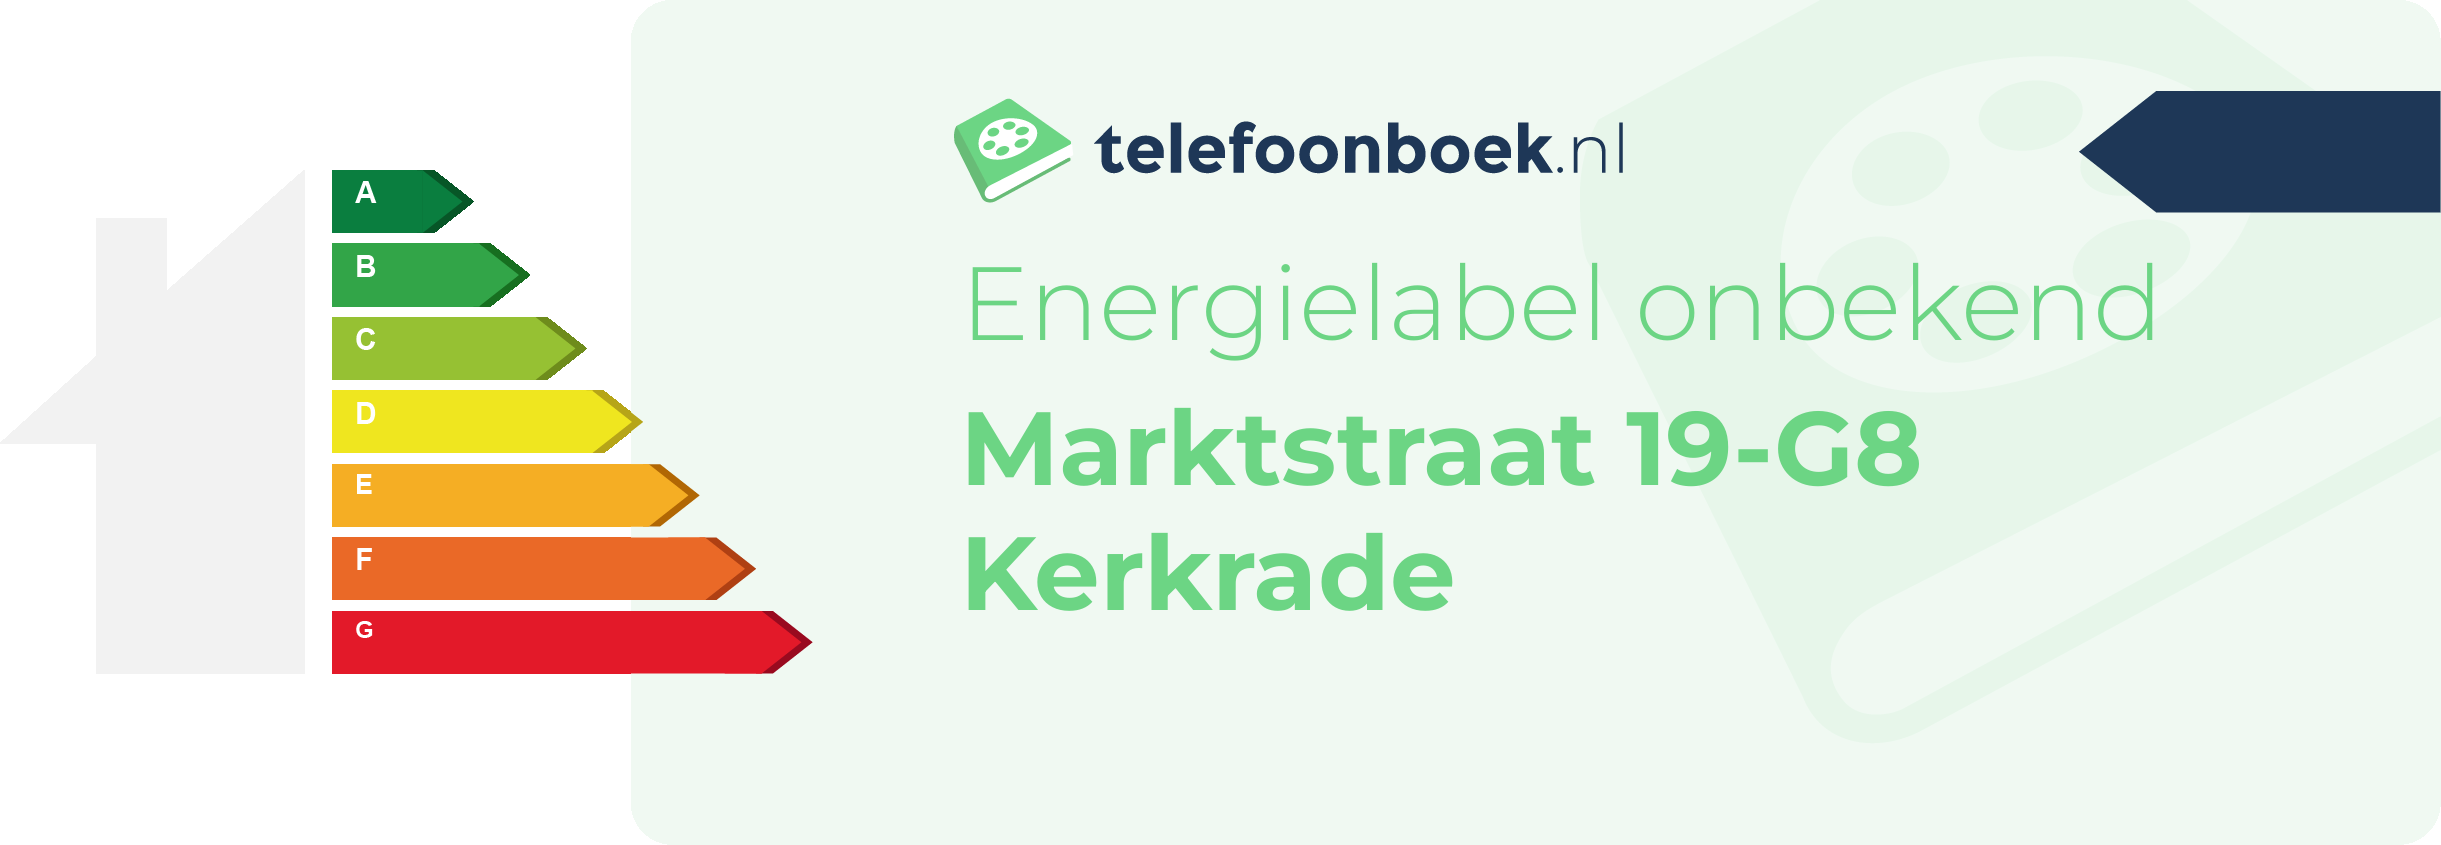 Energielabel Marktstraat 19-G8 Kerkrade